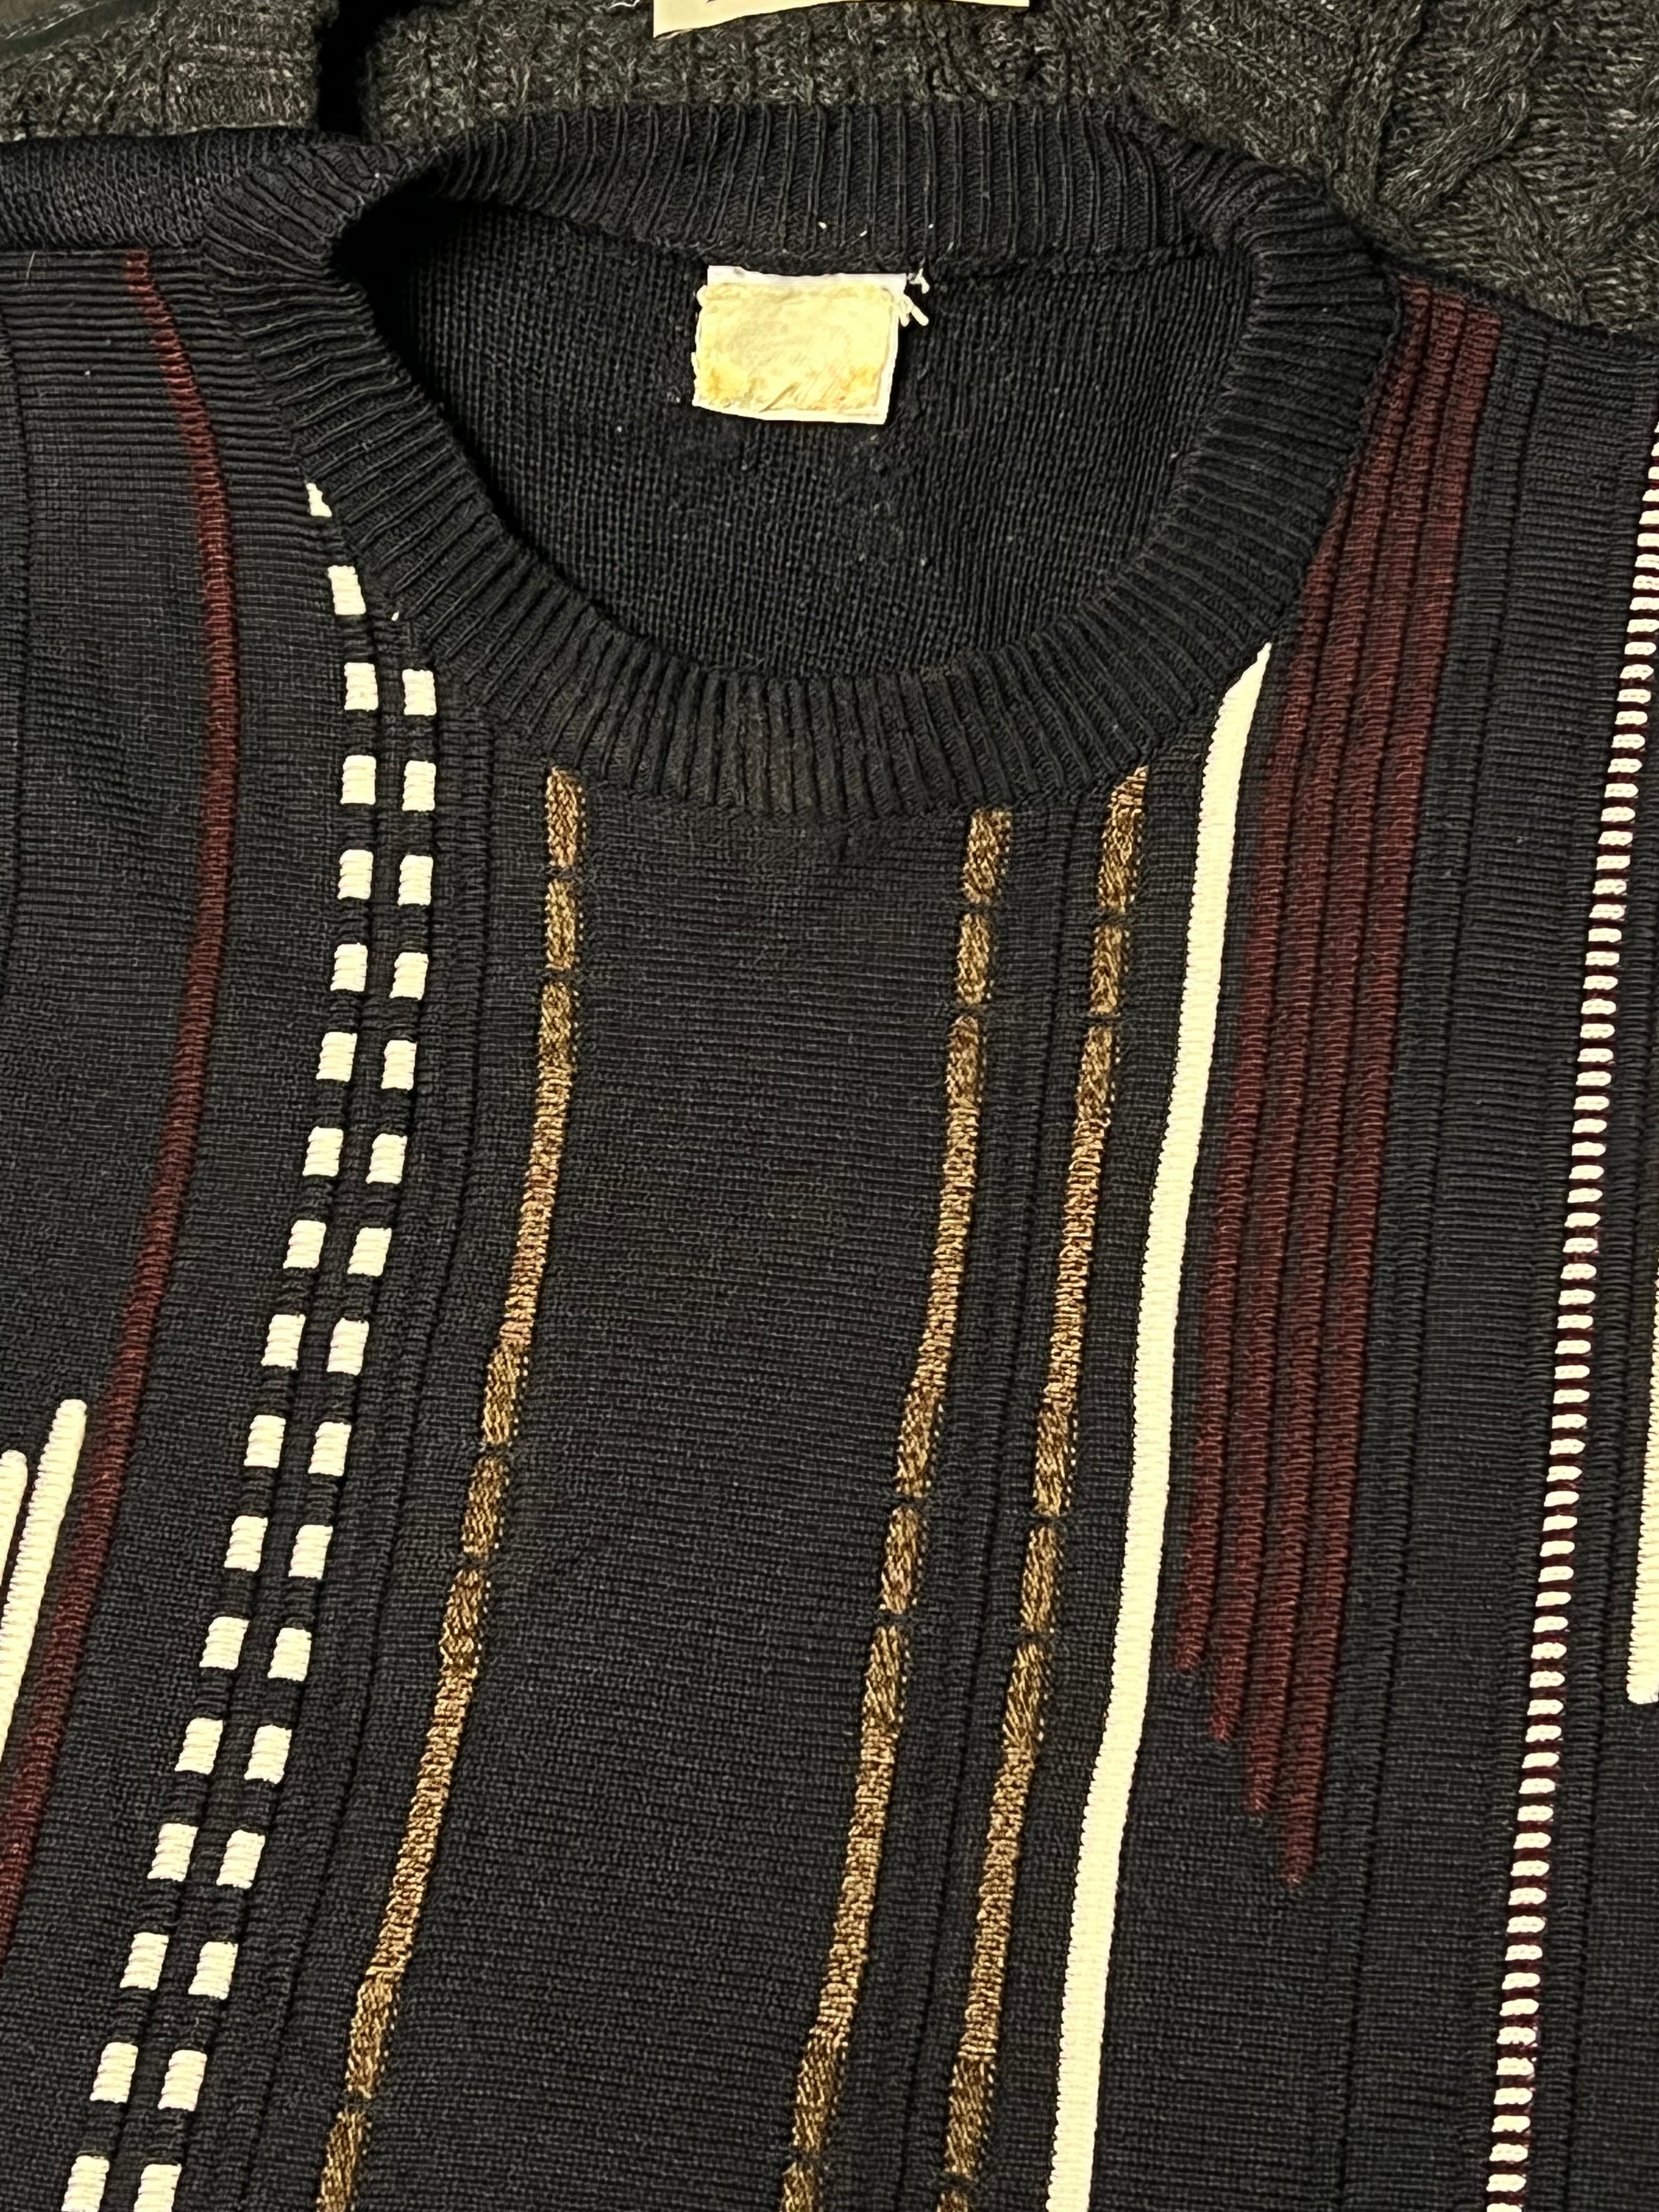 Vintage 80s 90s Wool Knit Sweater (M)